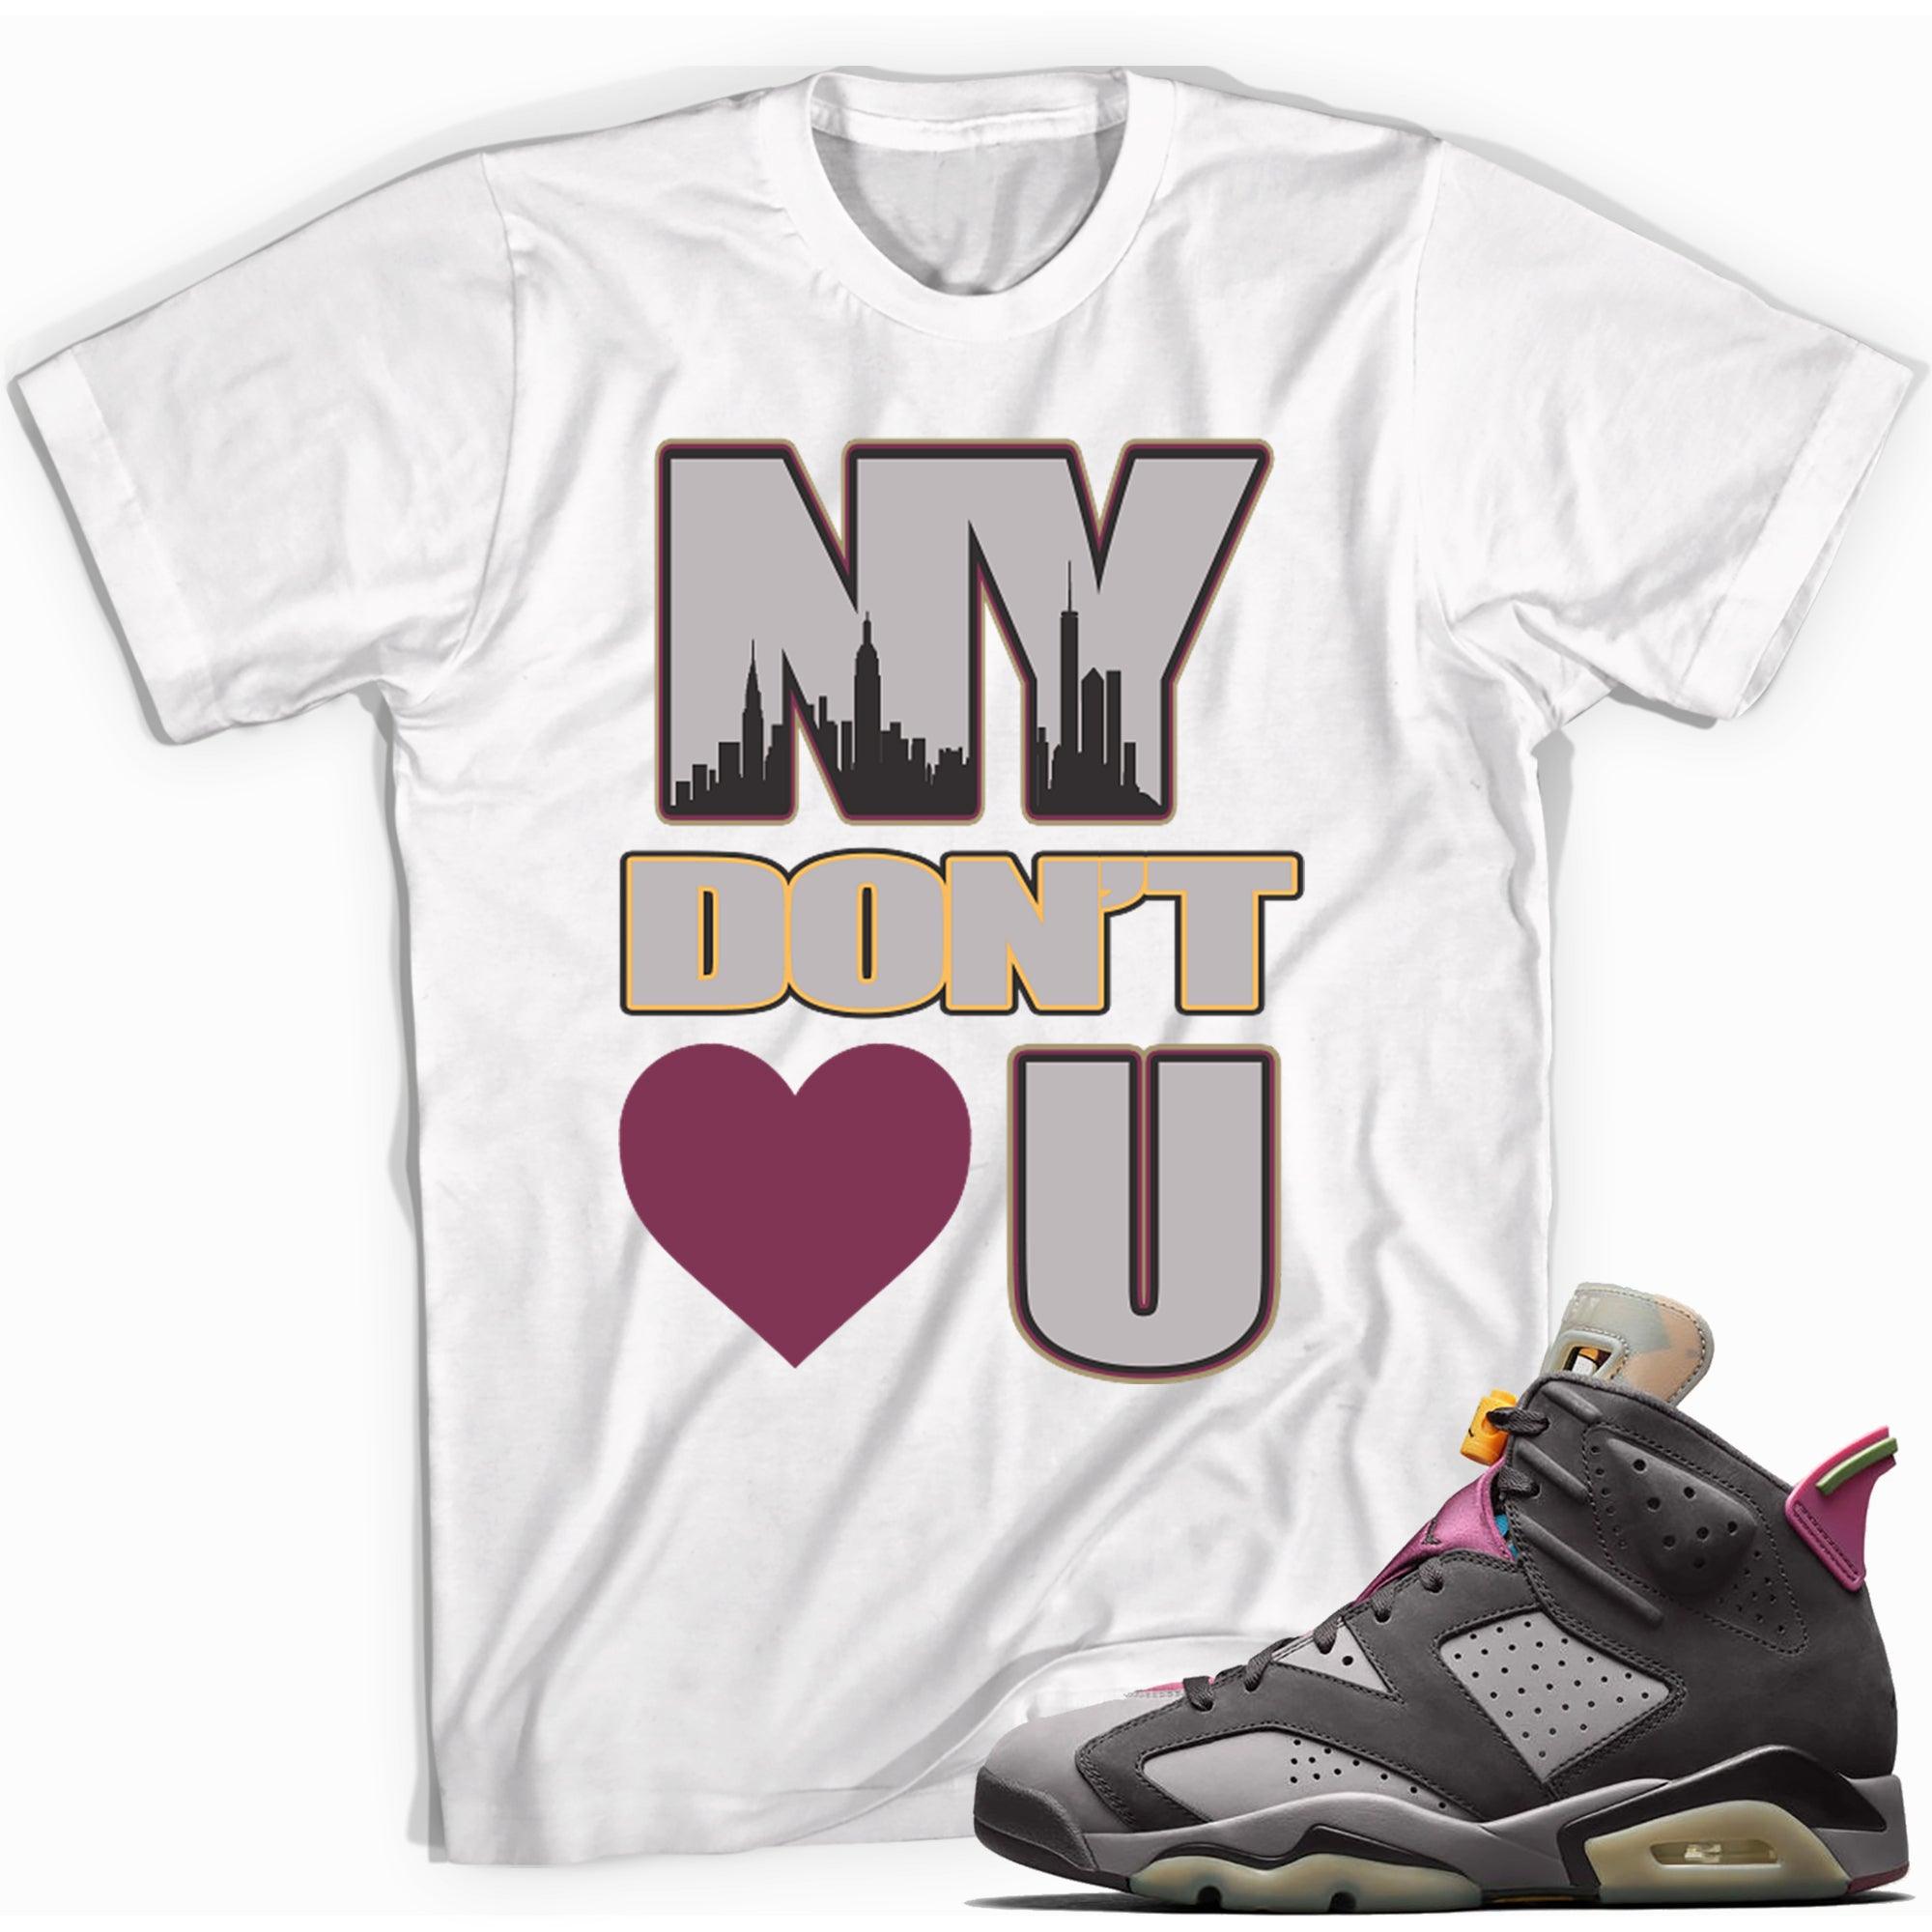 NY Don't Love You Sneaker Tee Jordan 6 Bordeaux photo